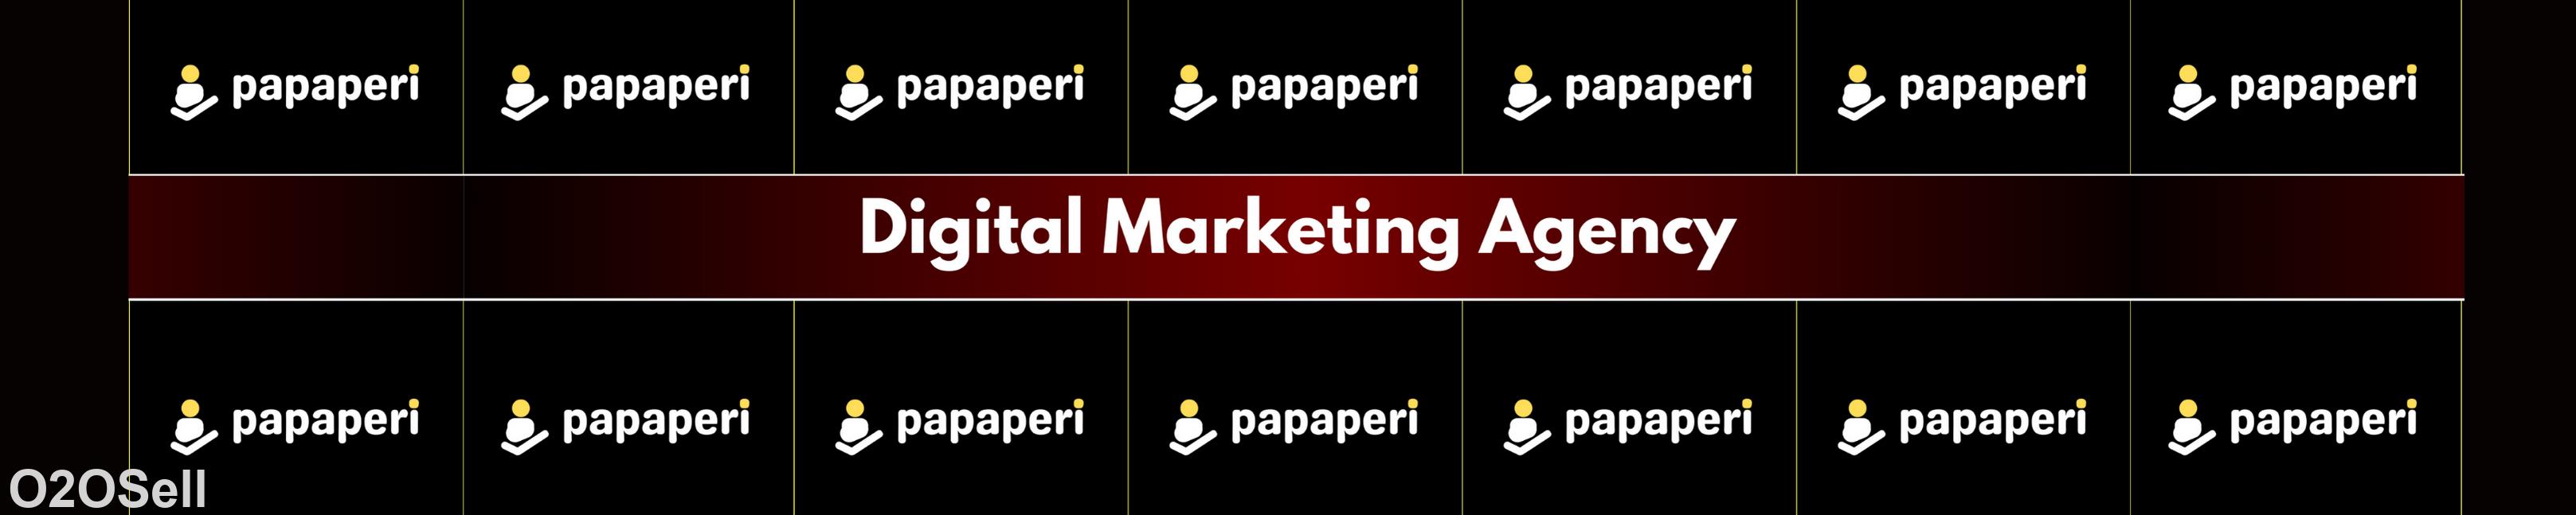 Papaperi - Digital Marketing Agency - Cover Image